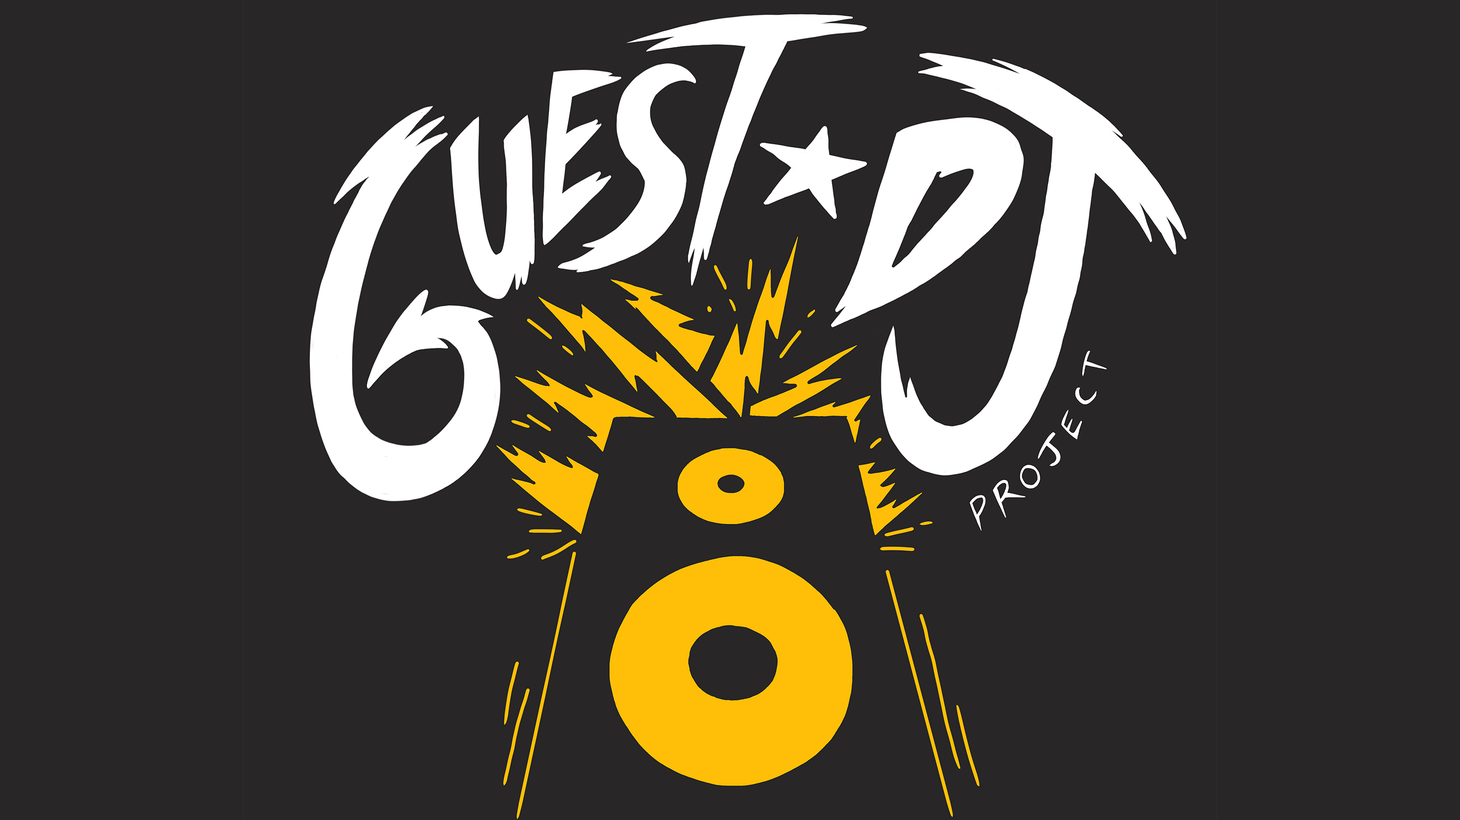 DJ Lance Rock aka Lance Robertson, Guest DJ Project